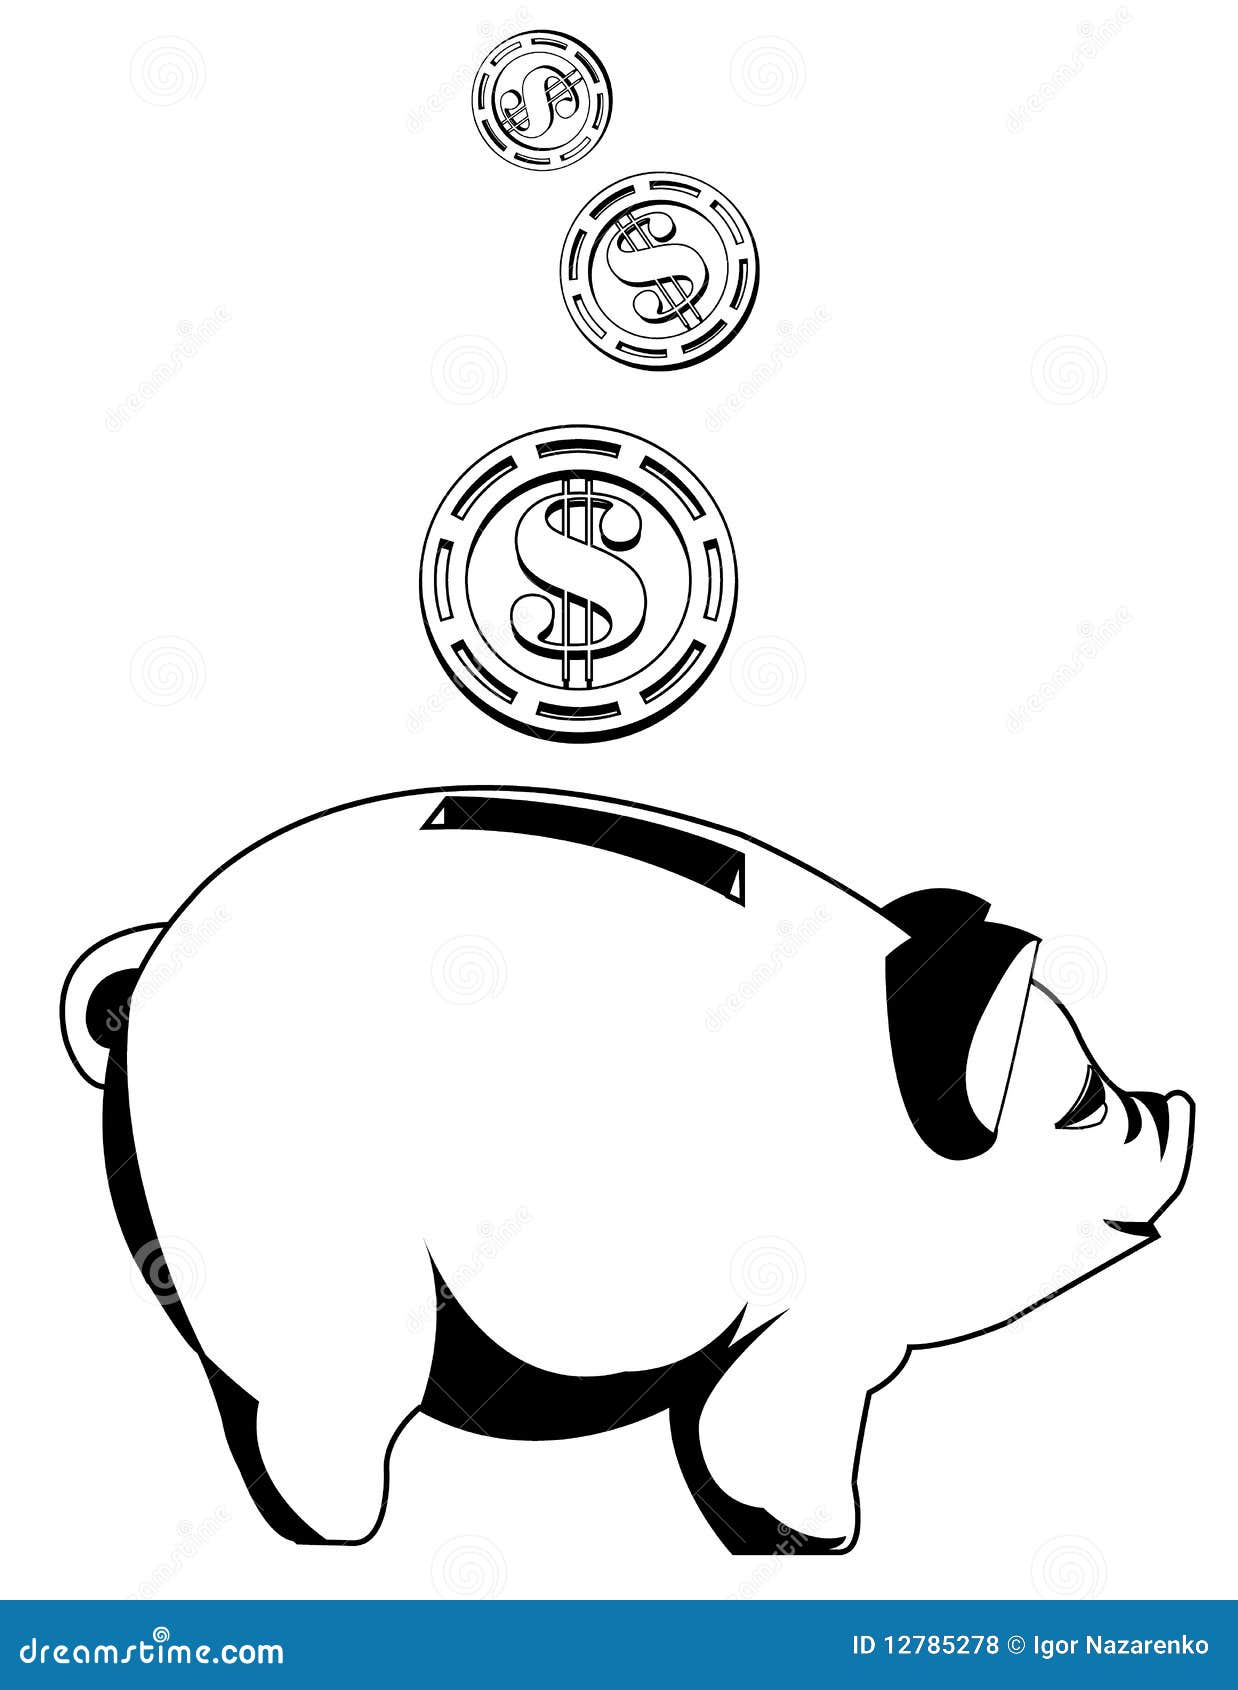 piggy bank clipart black and white - photo #24